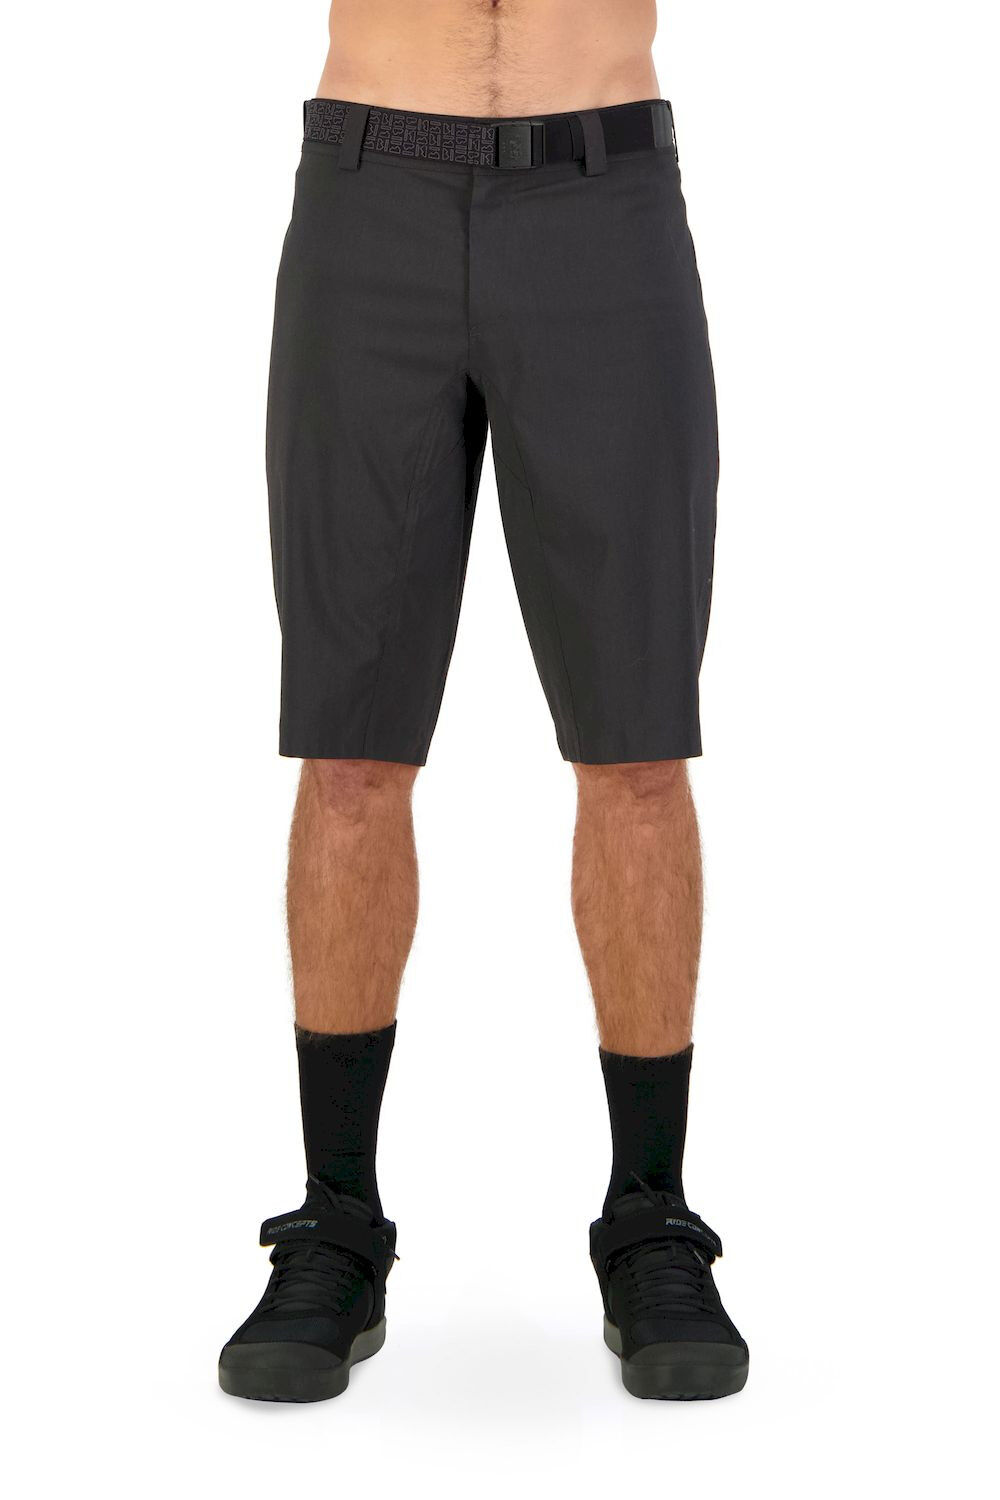 Mons Royale Virage Bike Shorts - MTB shorts - Men's